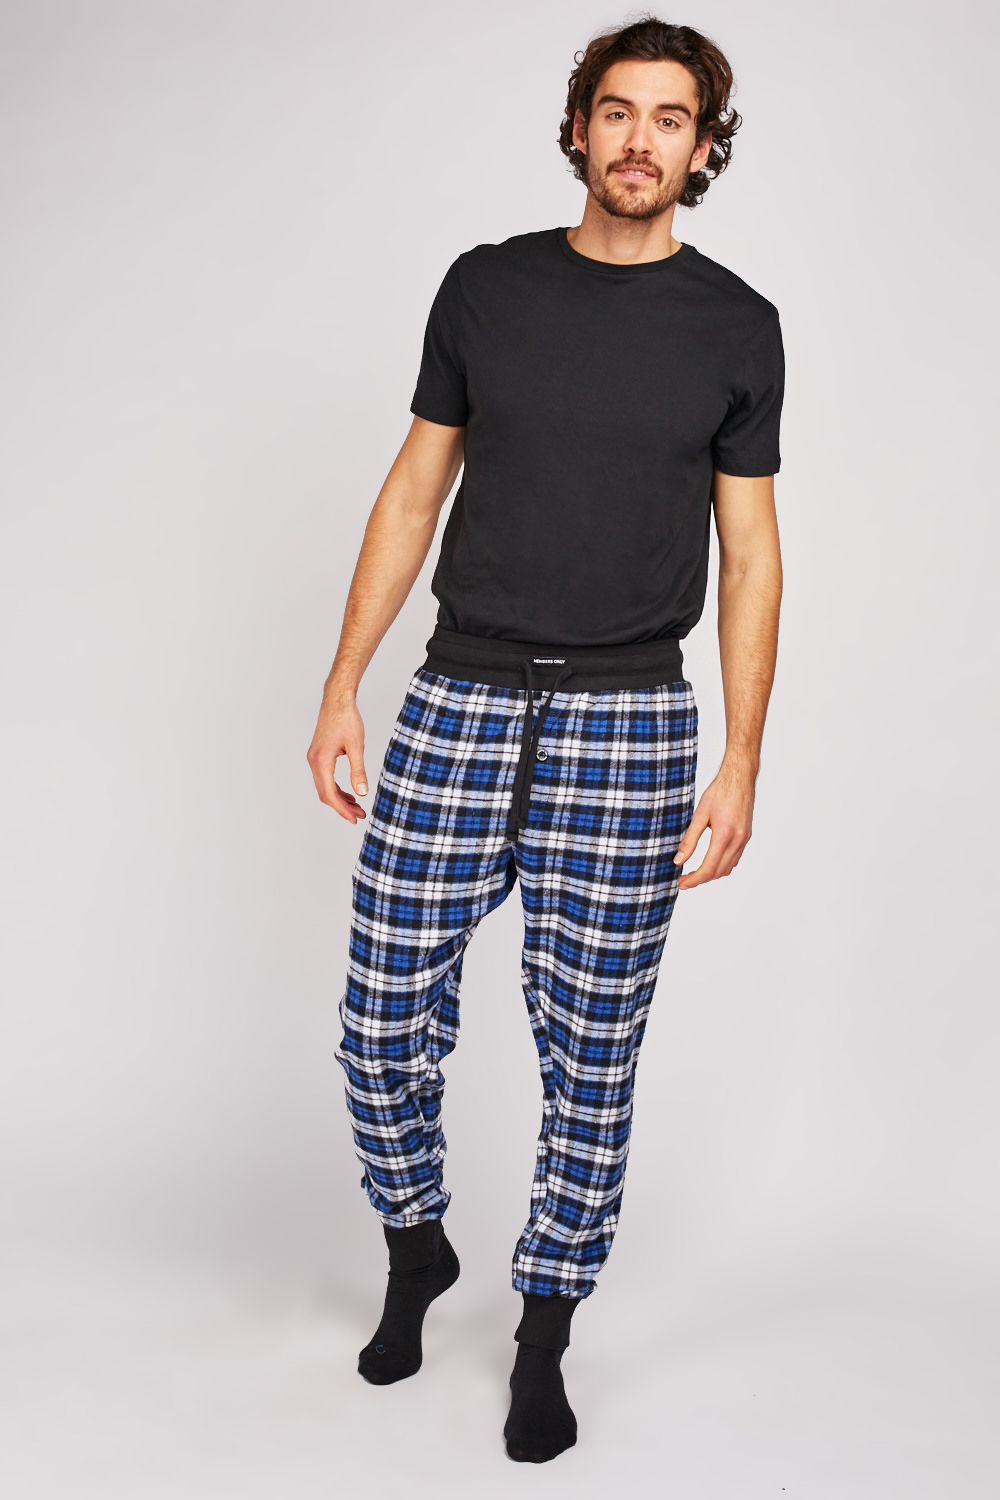 Checkered Light Weight Pyjama Bottoms - Just $7